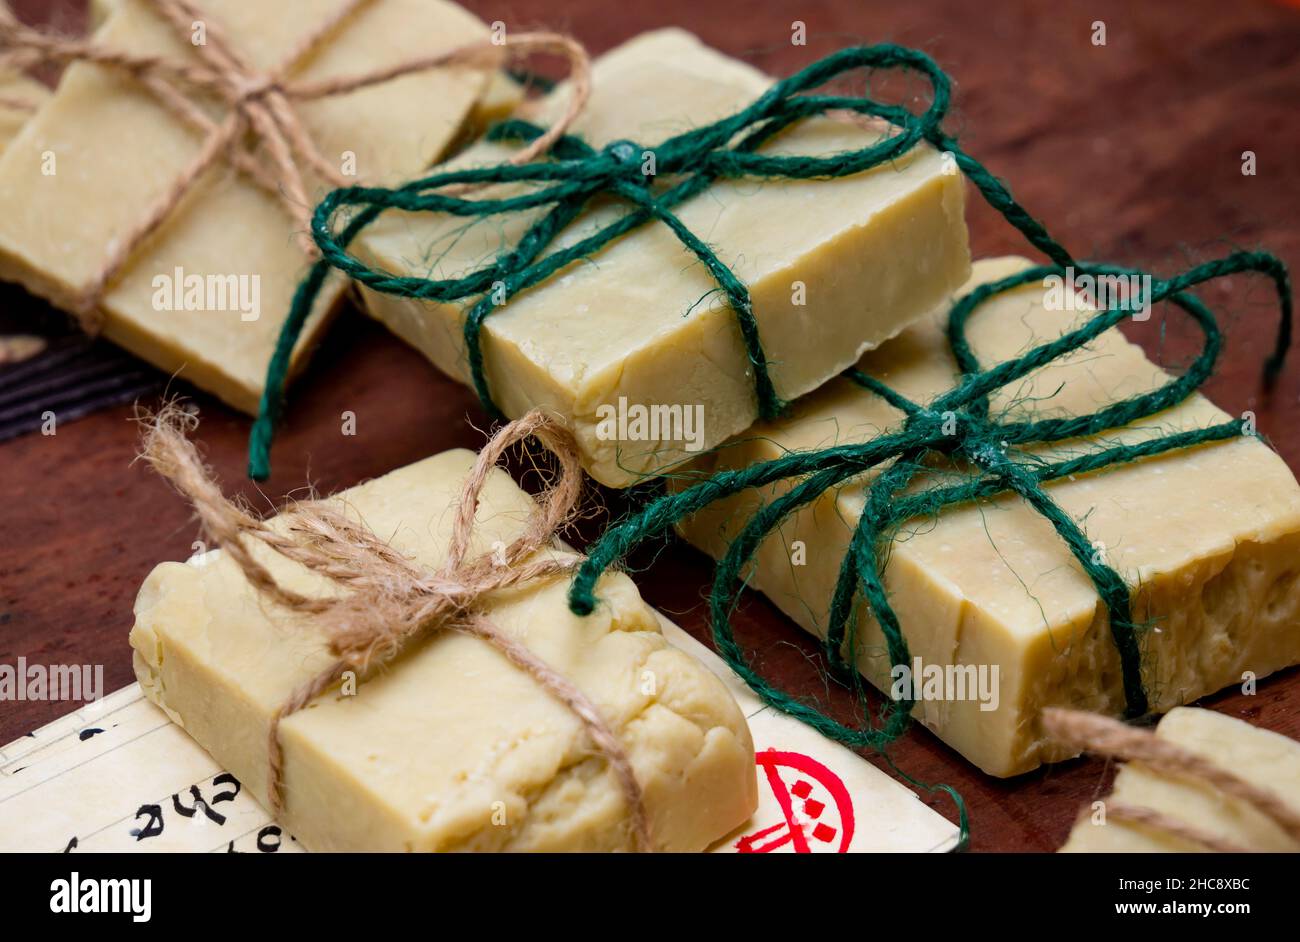 handmade soap artisan recipe, assorted soaps on table Stock Photo